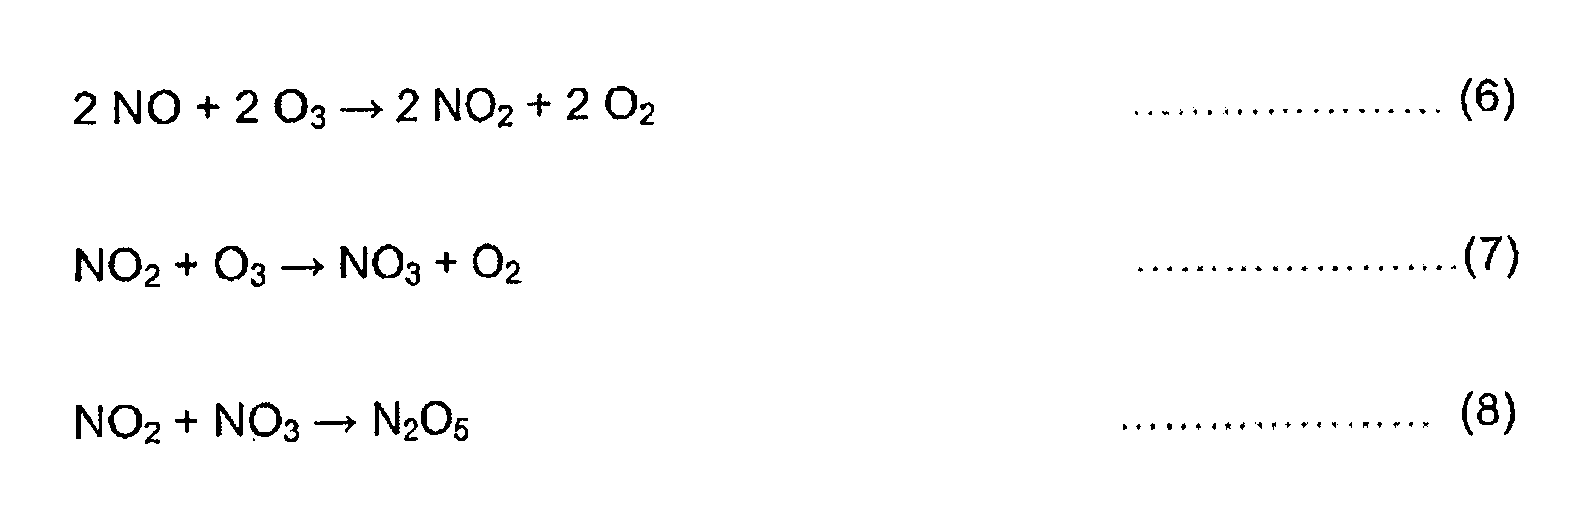 Оксид фосфора 5 с азотной кислотой реакция. Разложение азотной кислоты уравнение. Разложение оксида азота 5. Реакция разложения оксида азота 2. Цепочки с азотной кислотой.